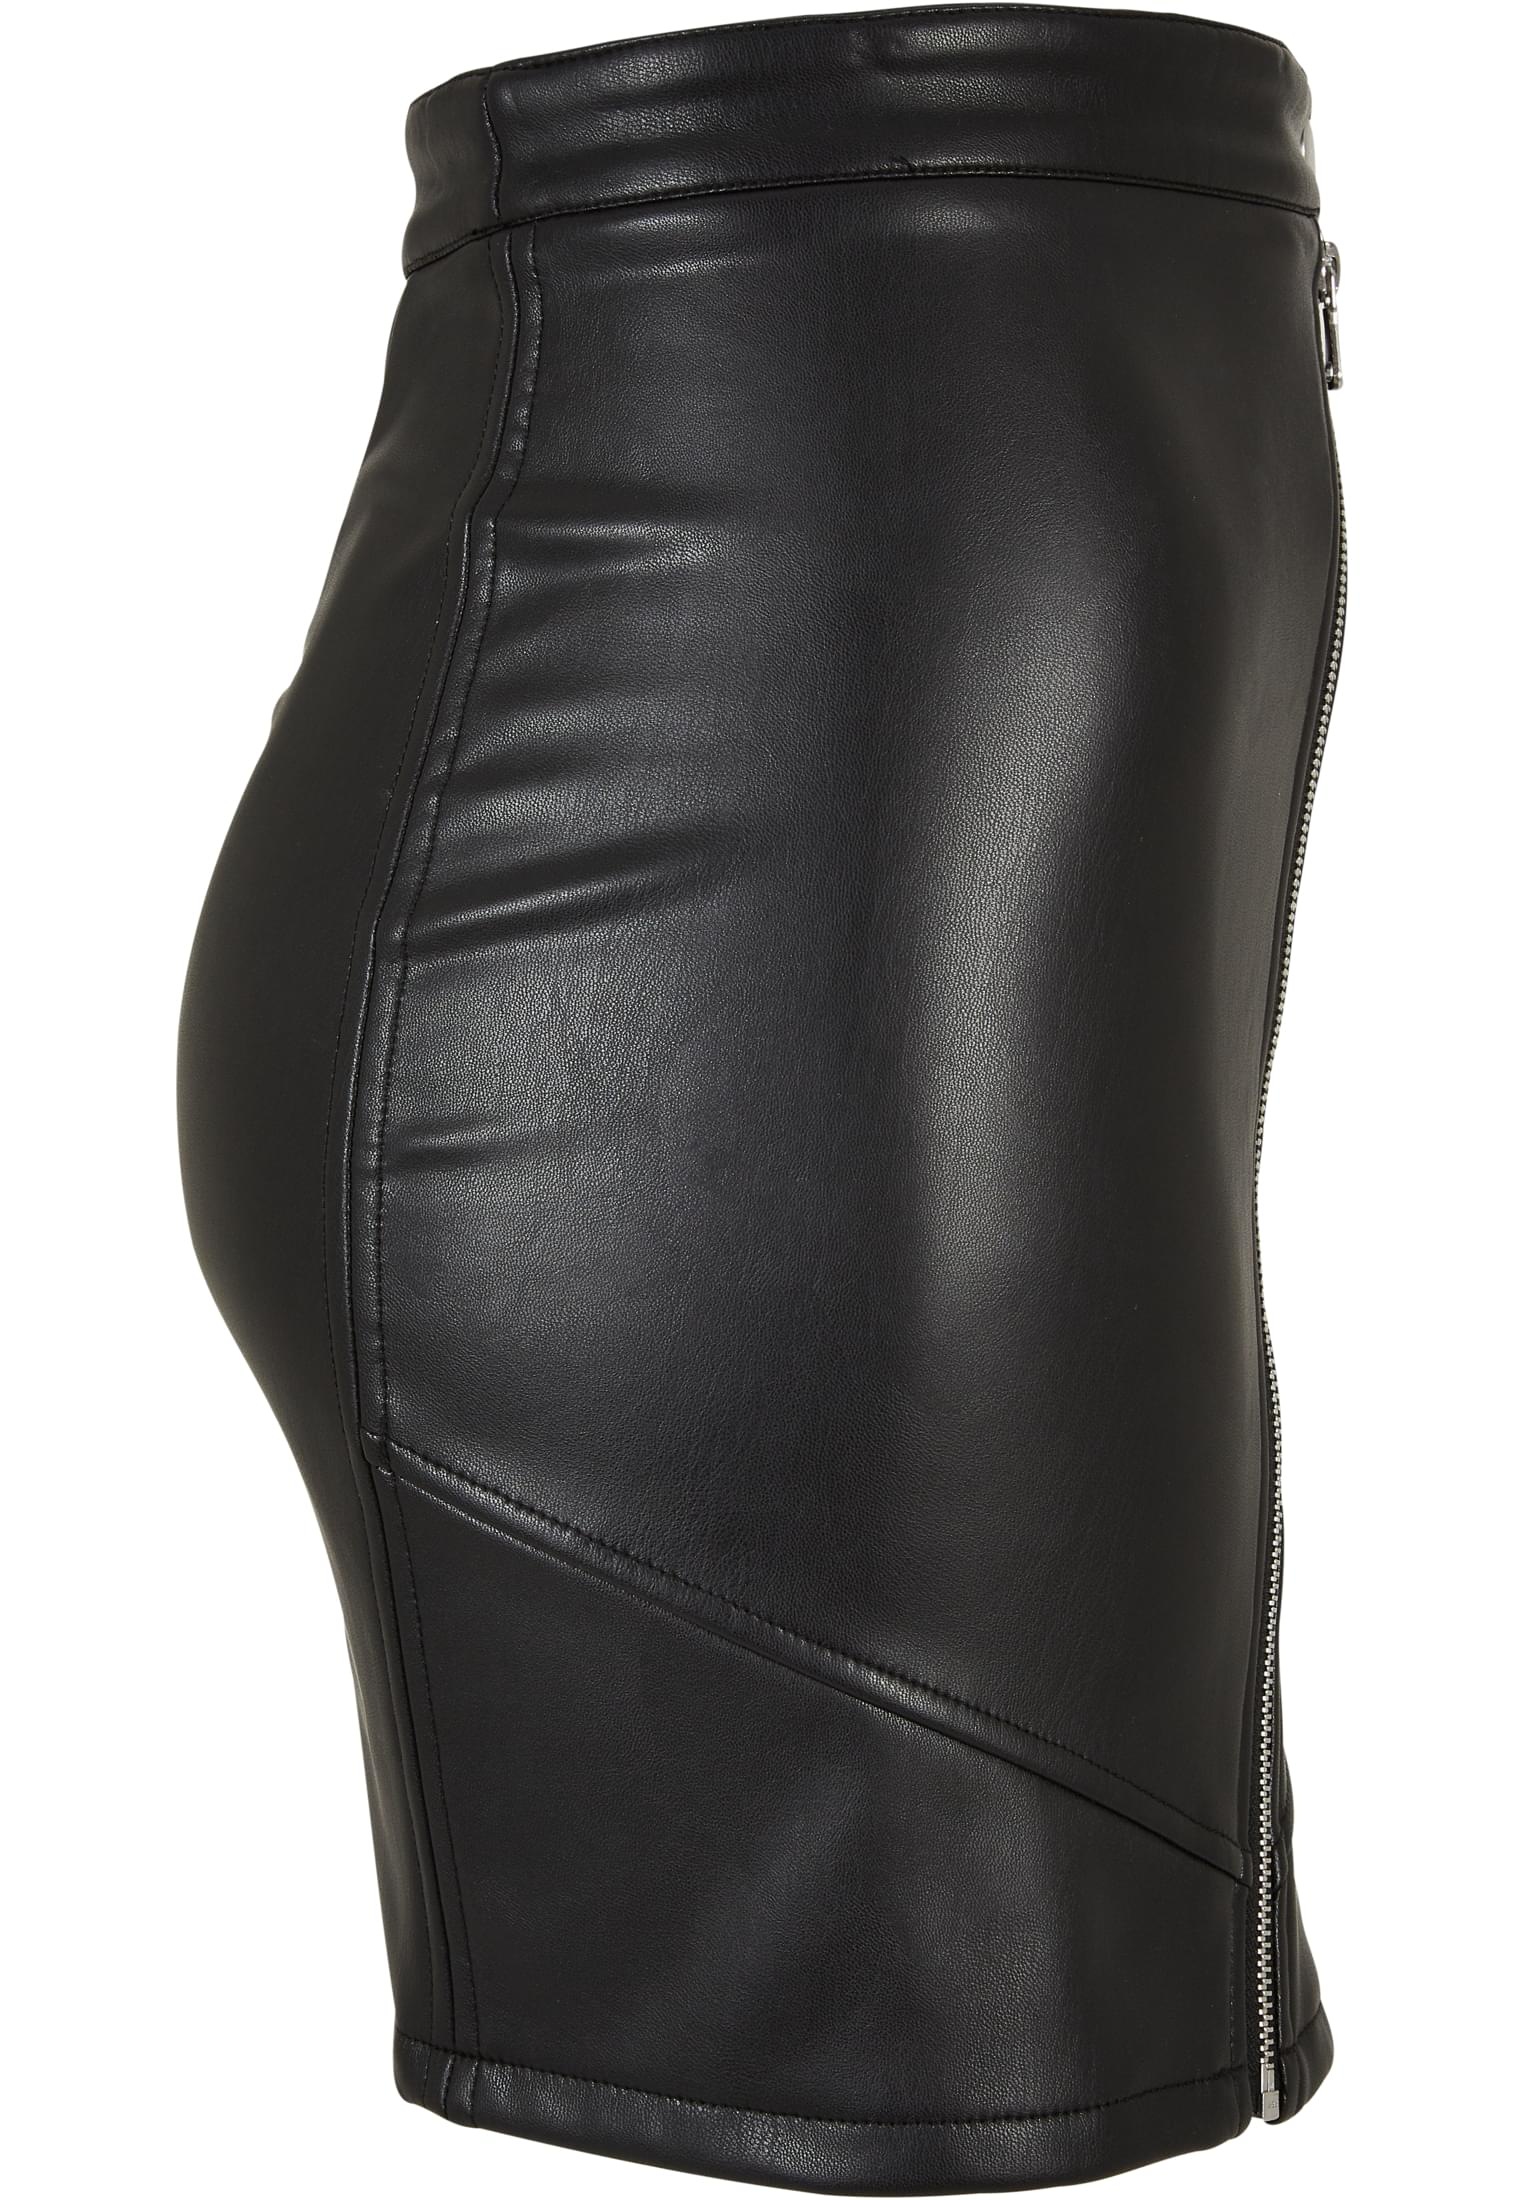 URBAN CLASSICS Jerseyrock »Damen Ladies online Synthetic BAUR Skirt«, | (1 Leather tlg.) Biker kaufen